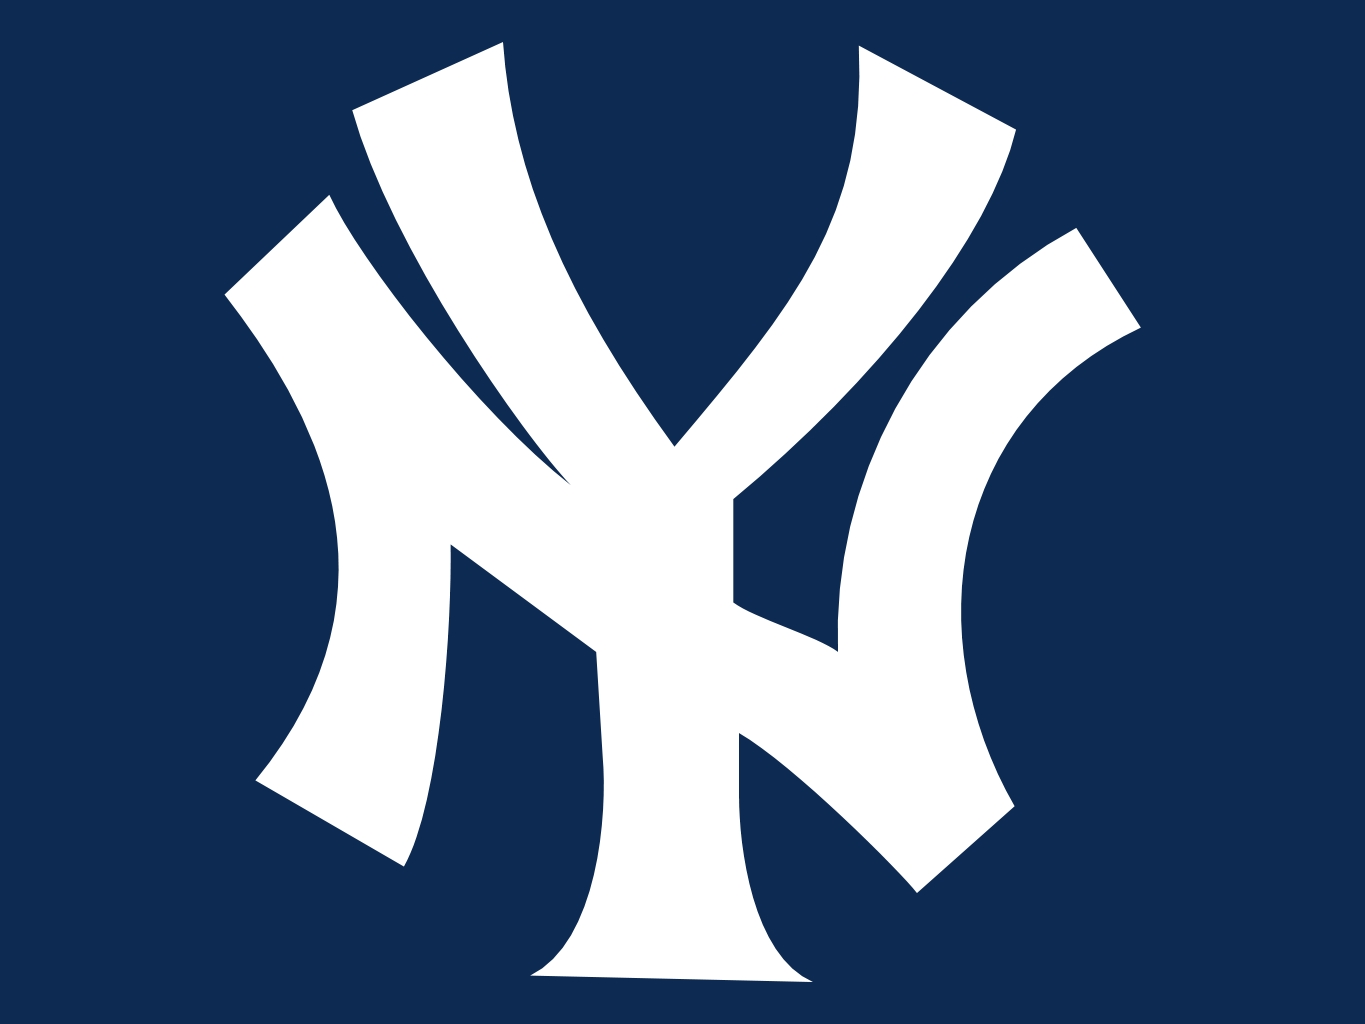 Yankees Wallpaper De New York El Manager Los